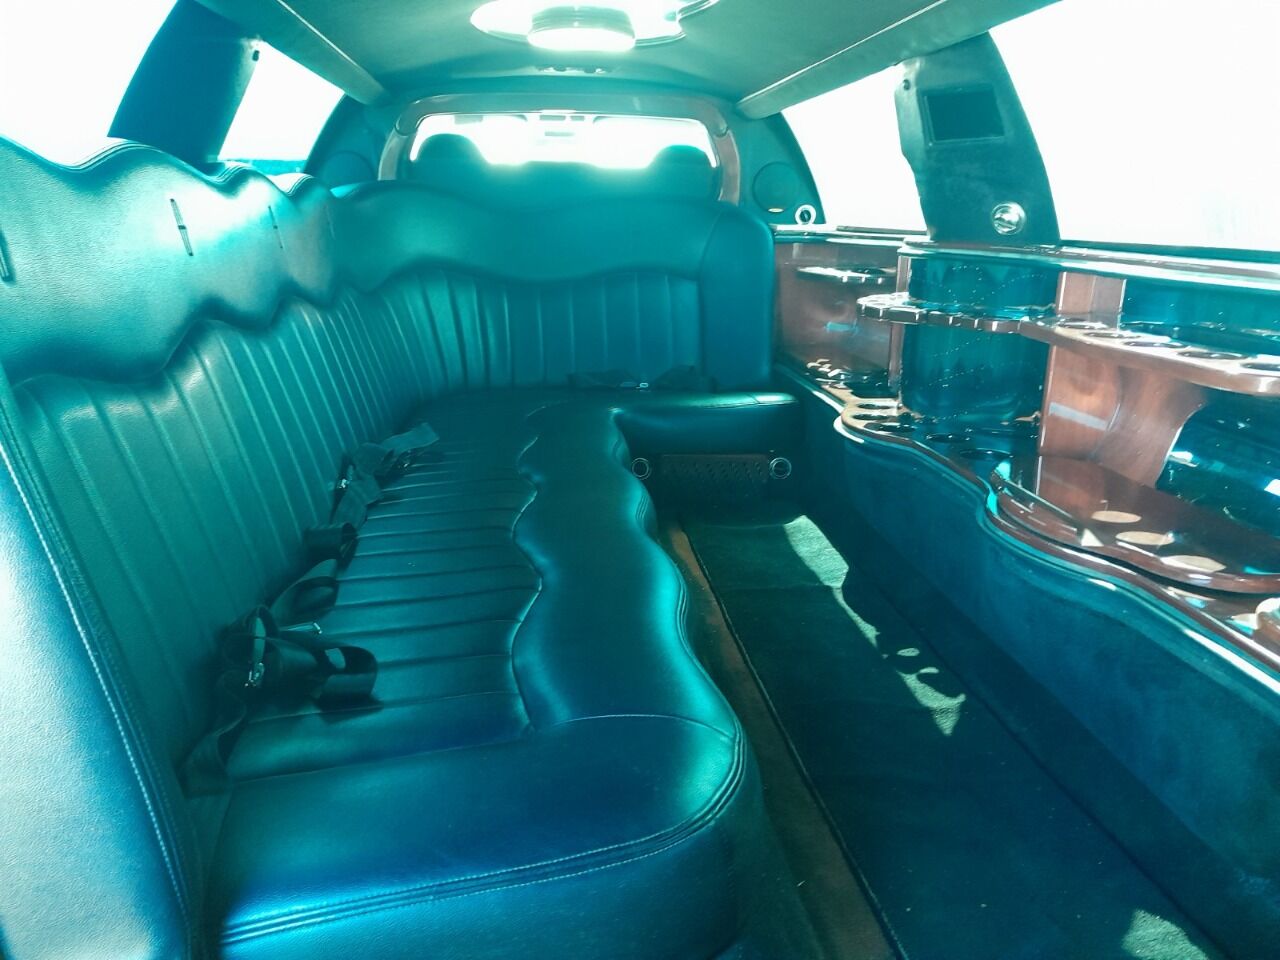 2003 Lincoln Town Car Limousine - $4,950